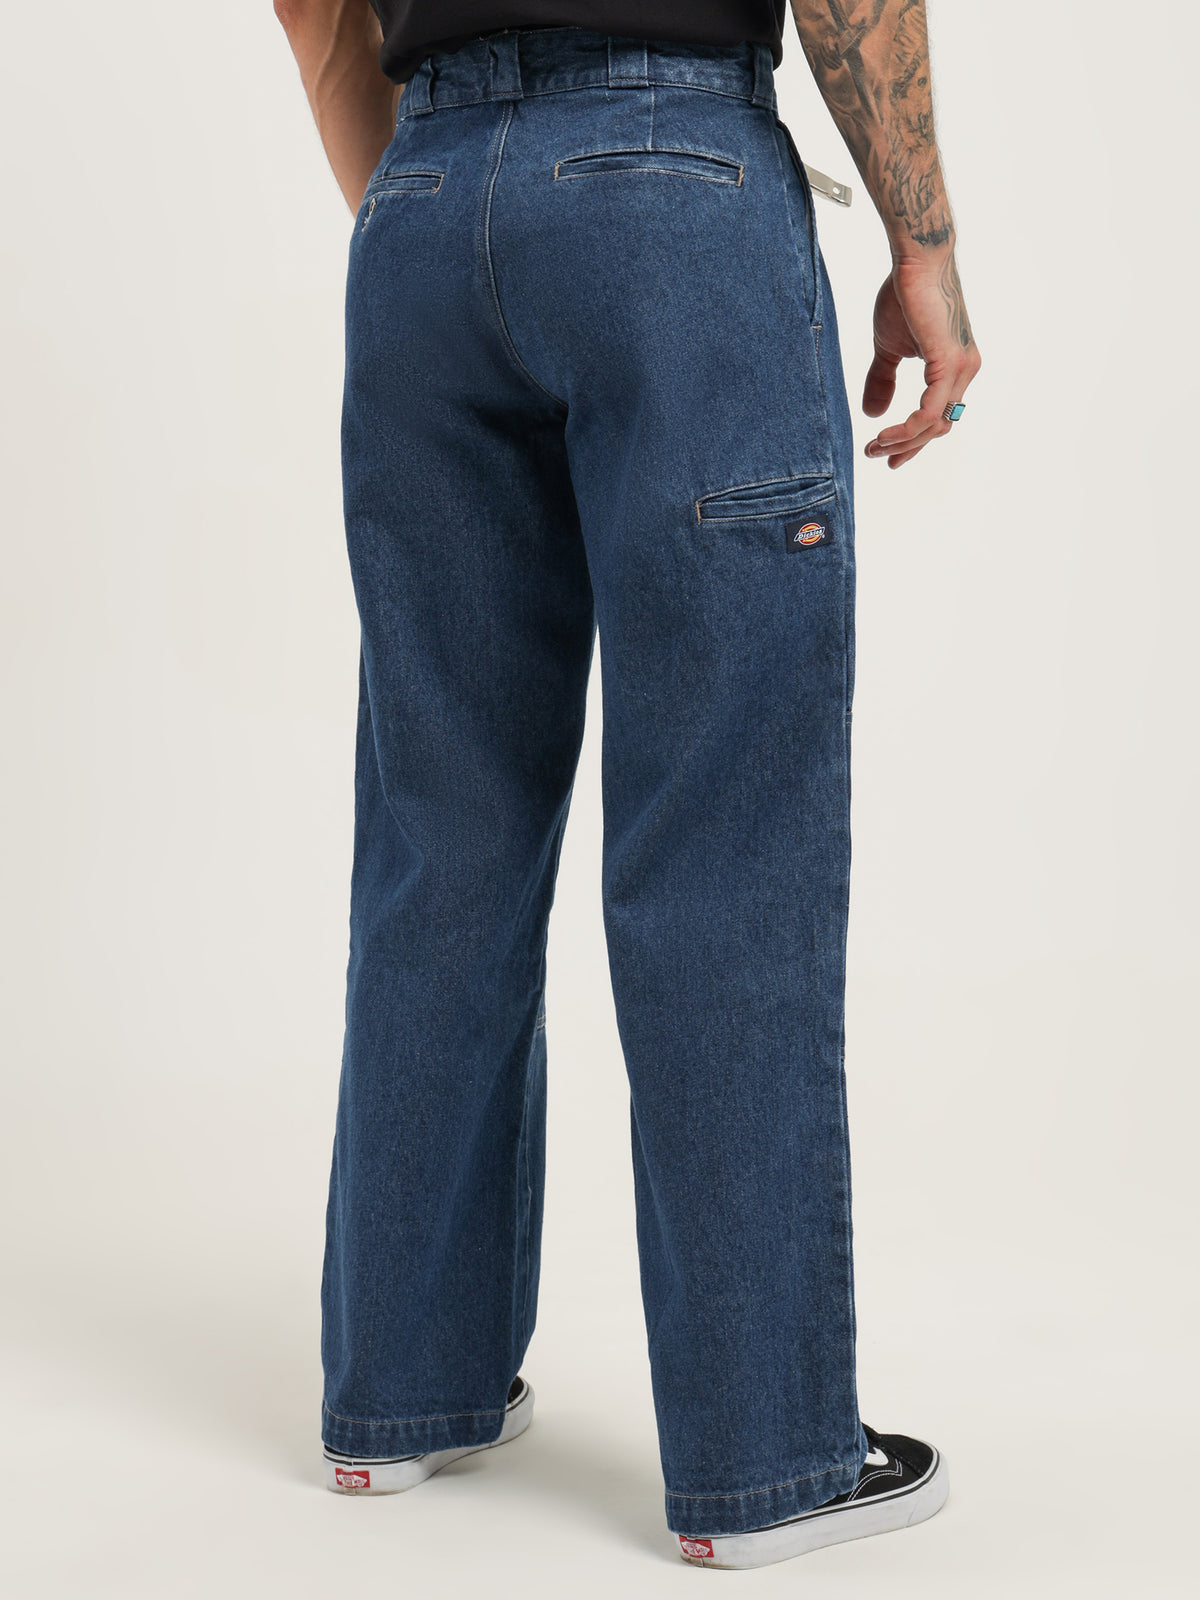 85-283AU Double Knee Jeans in Stone Washed Indigo Blue